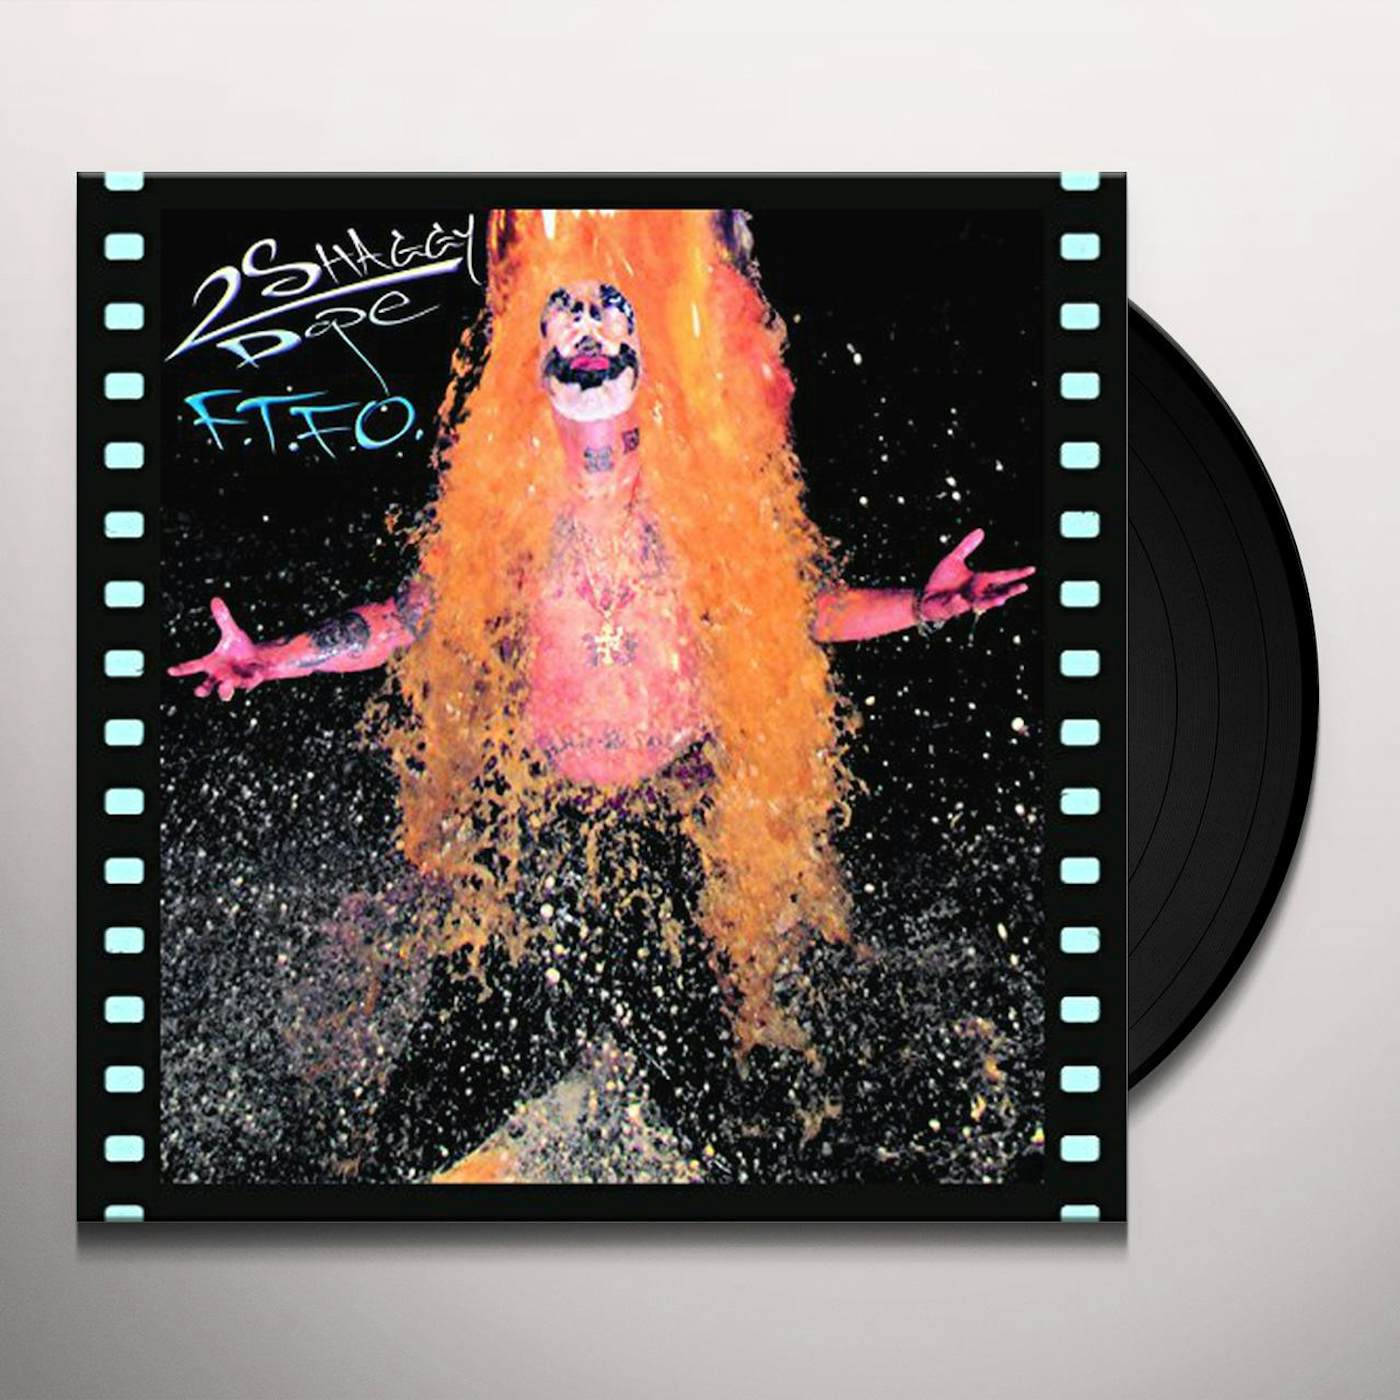 Shaggy 2 Dope FTFOMF Vinyl Record